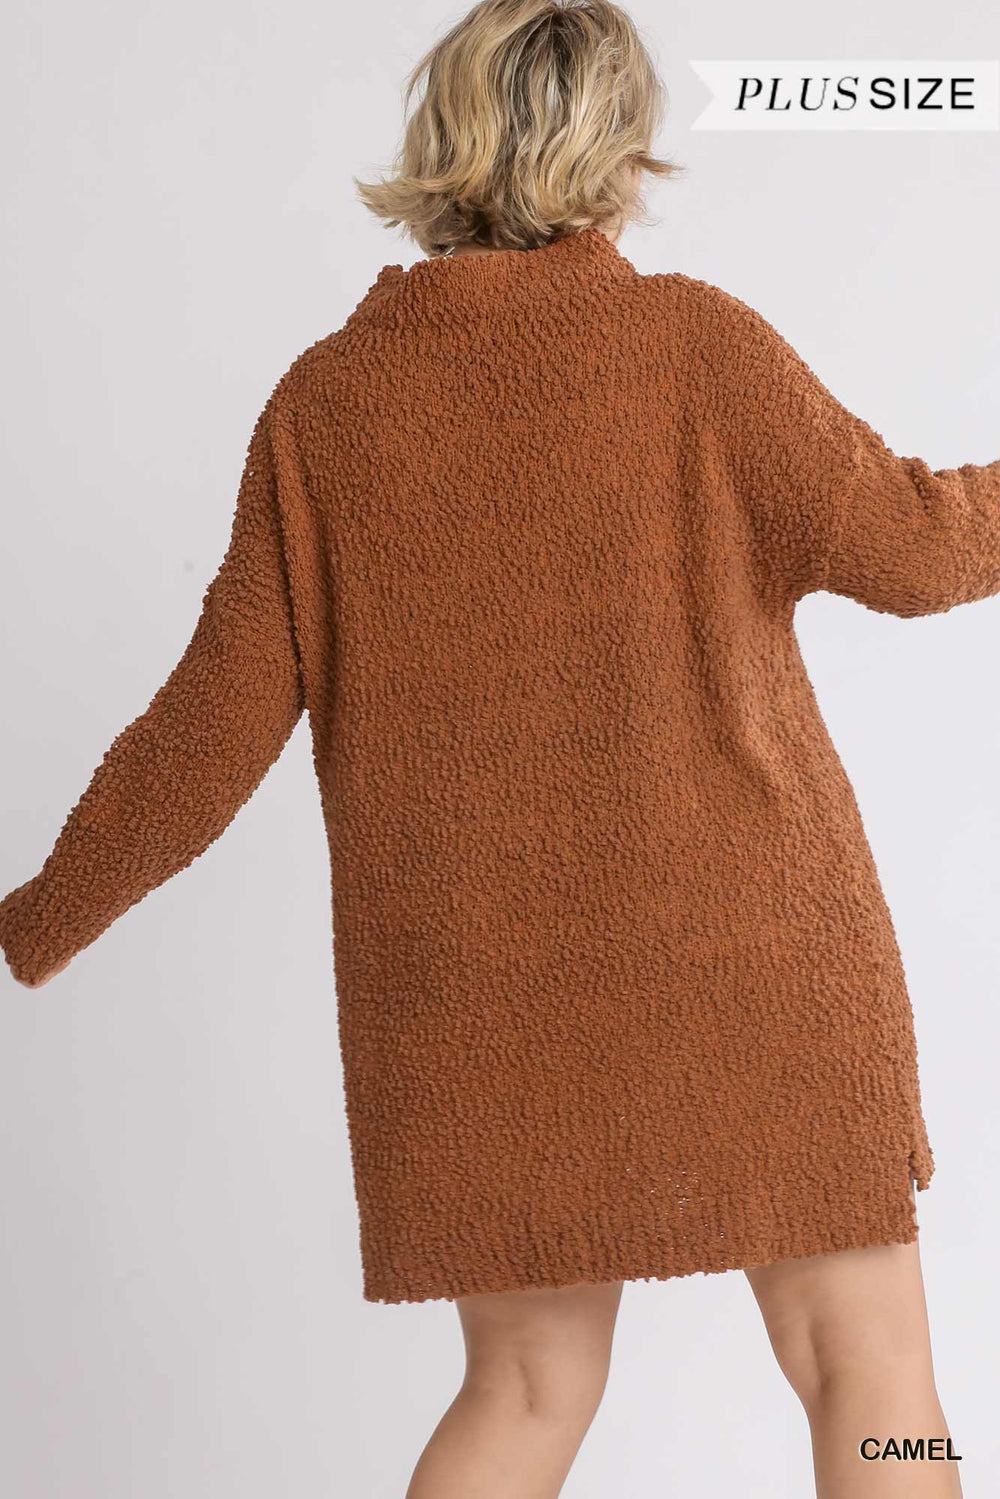 Umgee Melanie Cowl Neck Bouclé Sweater Dress - Camel  RYSE Clothing Co.   